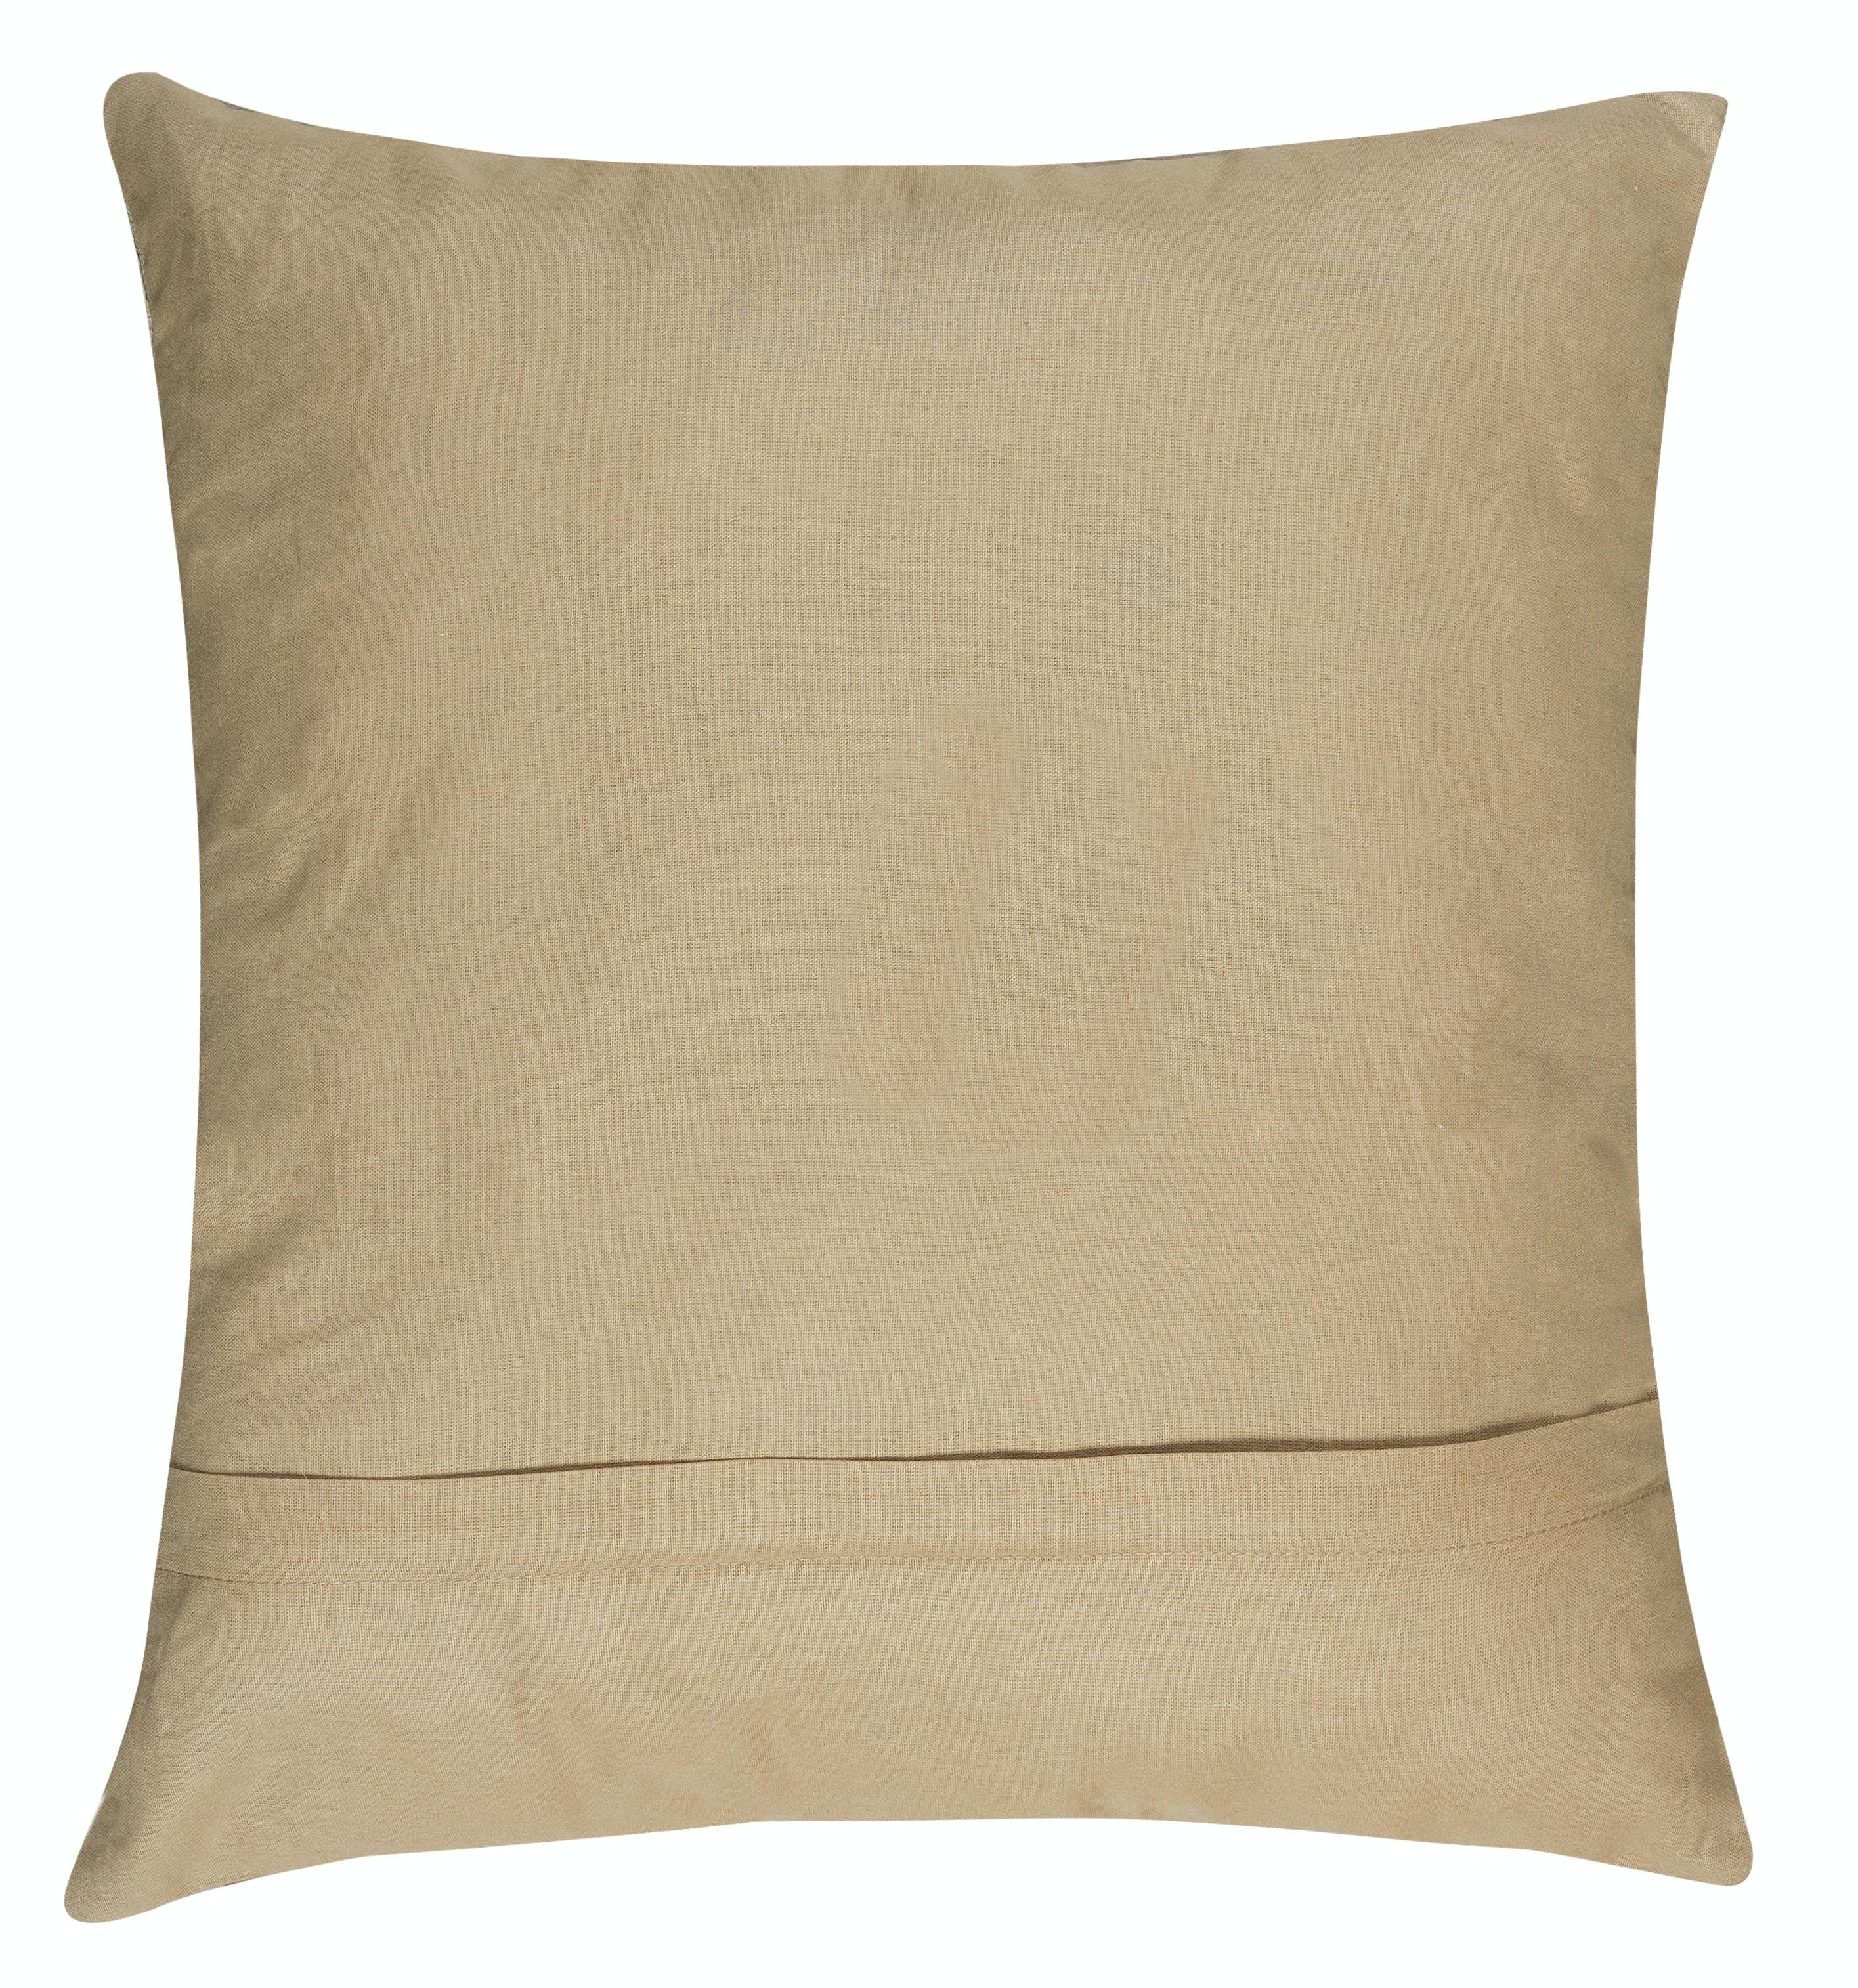 Uzbek Suzani Throw Pillow, 100% Silk Hand Embroidery Cushion Cover. 19